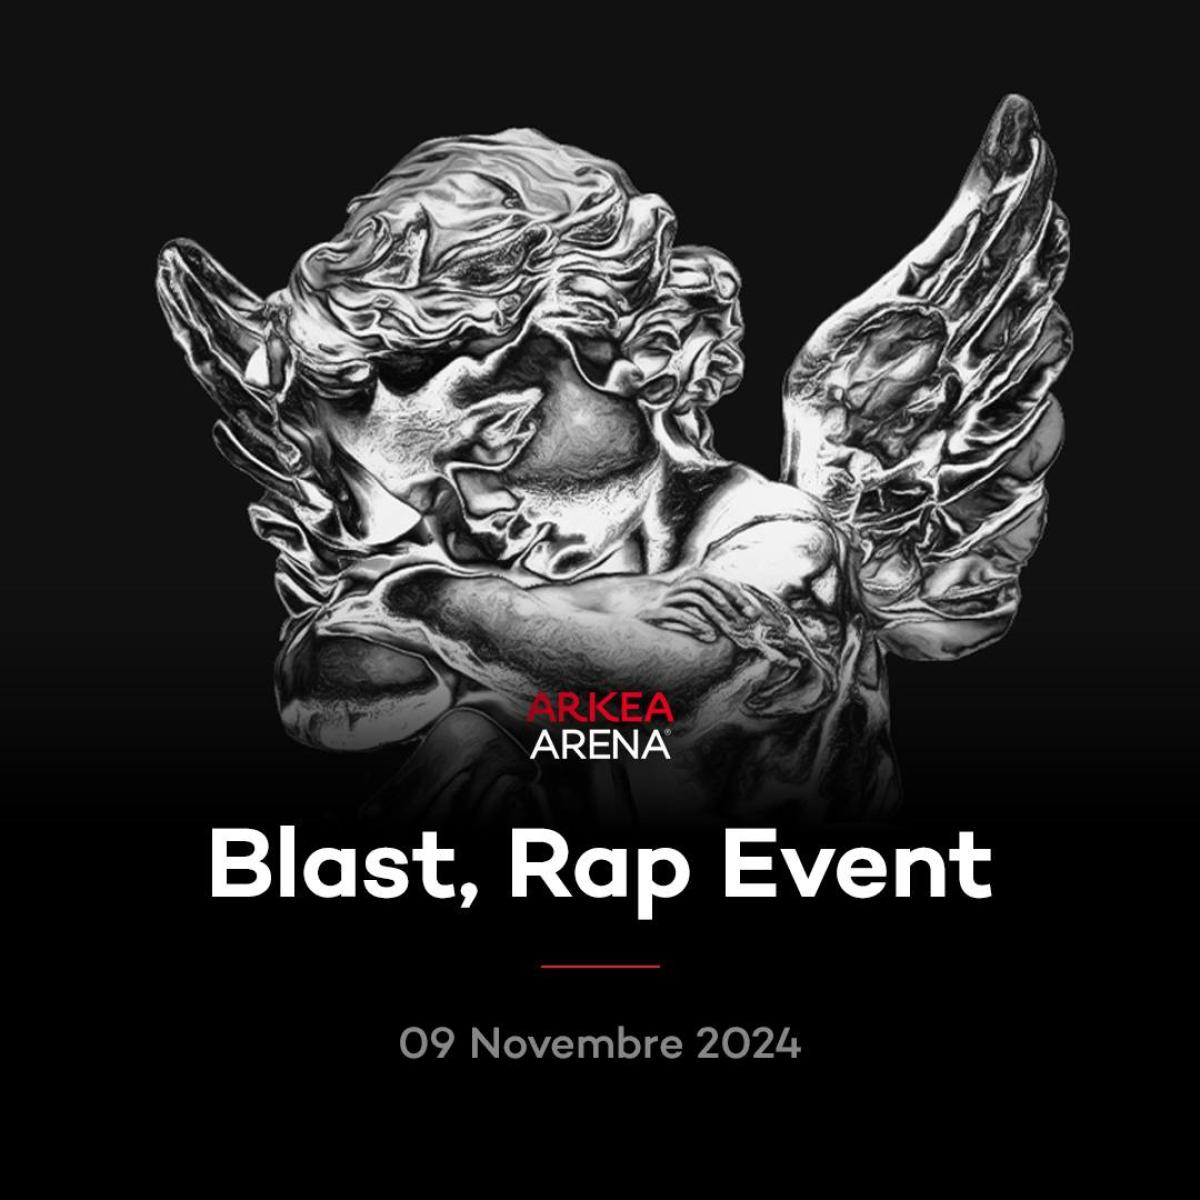 Blast - Rap Event al Arkea Arena Tickets